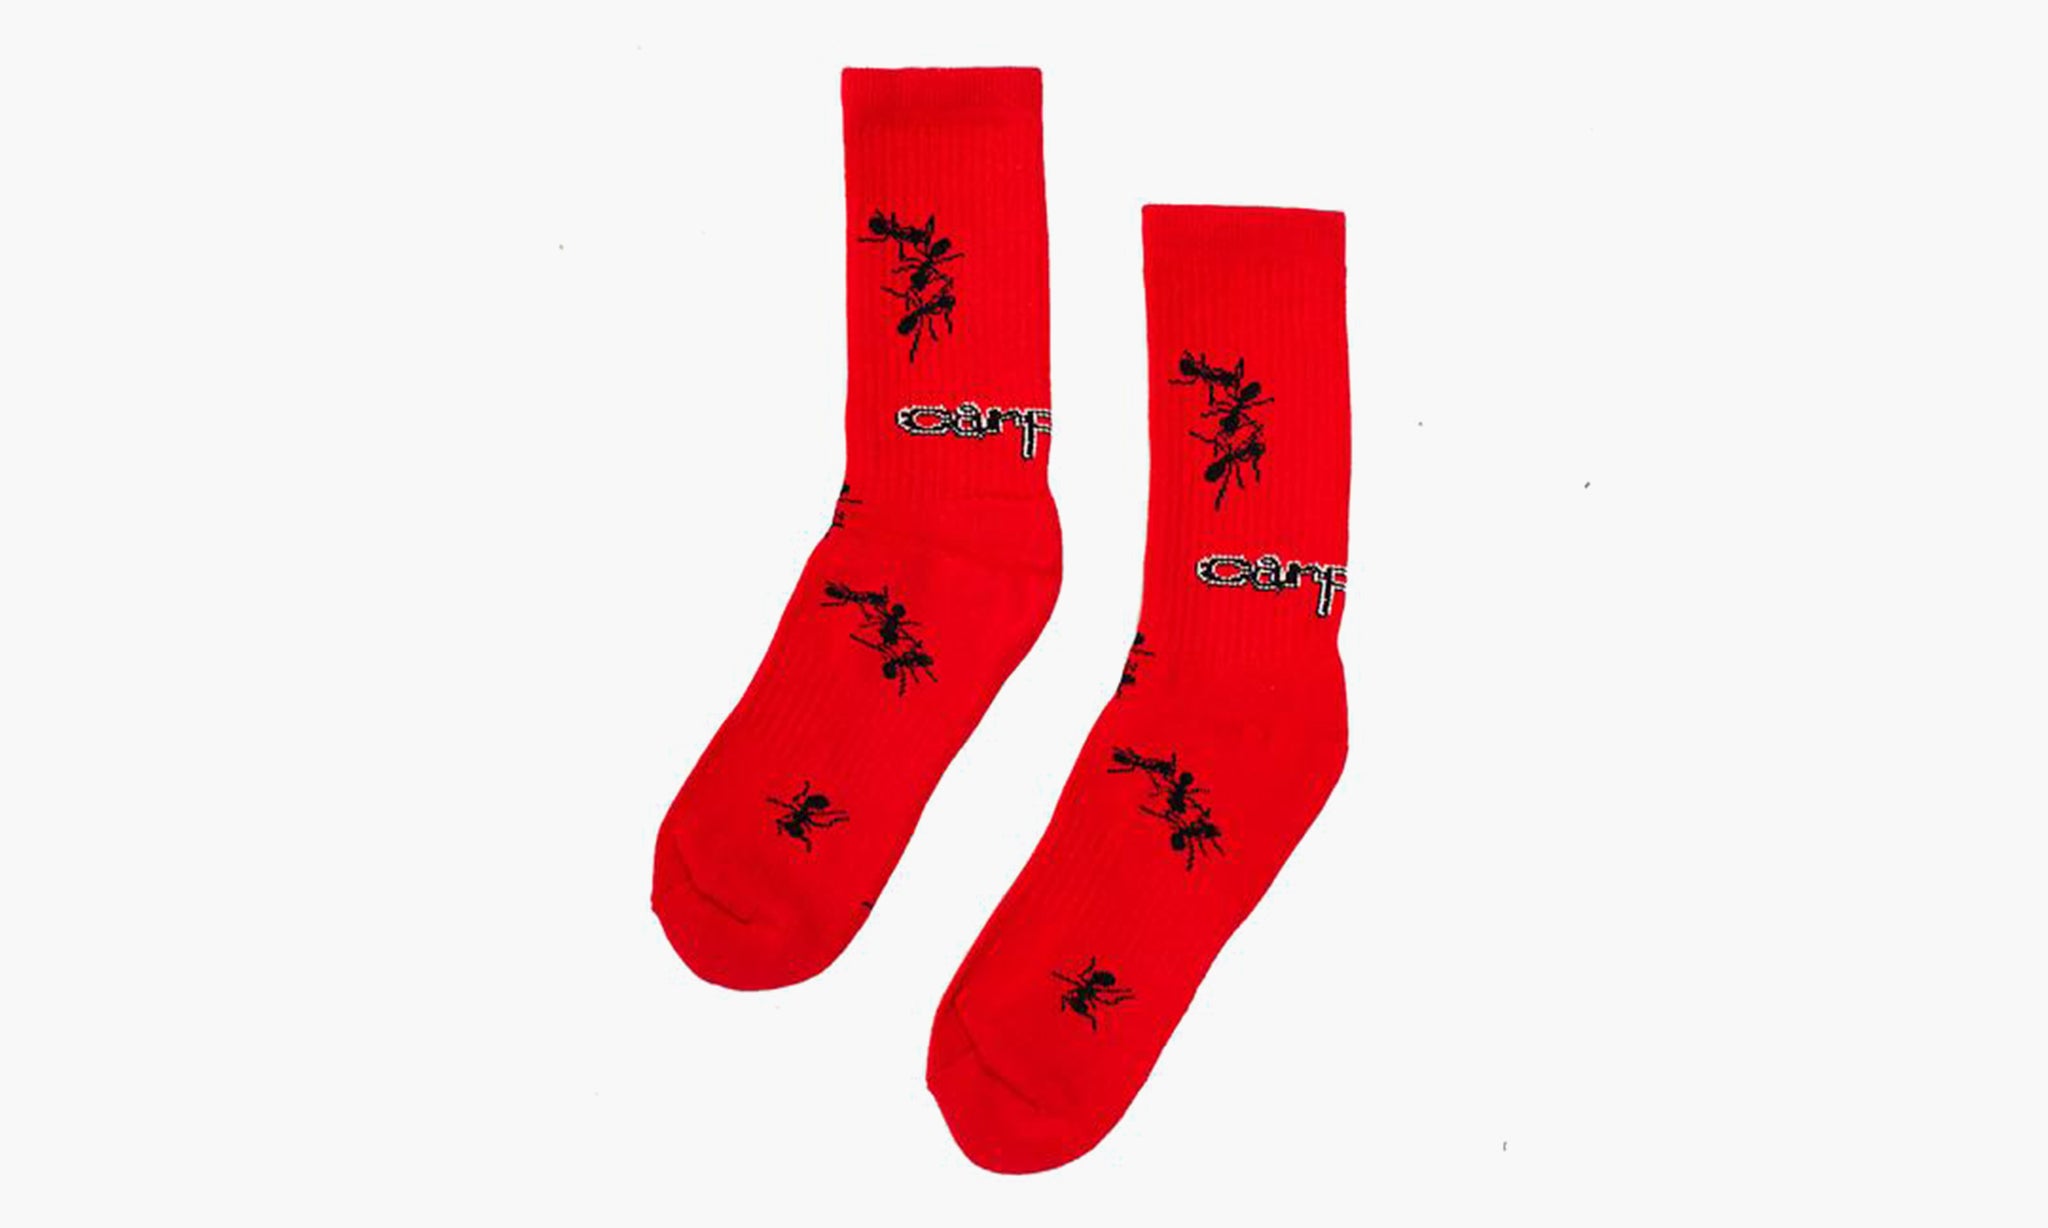 Carpet Company Ant socks red